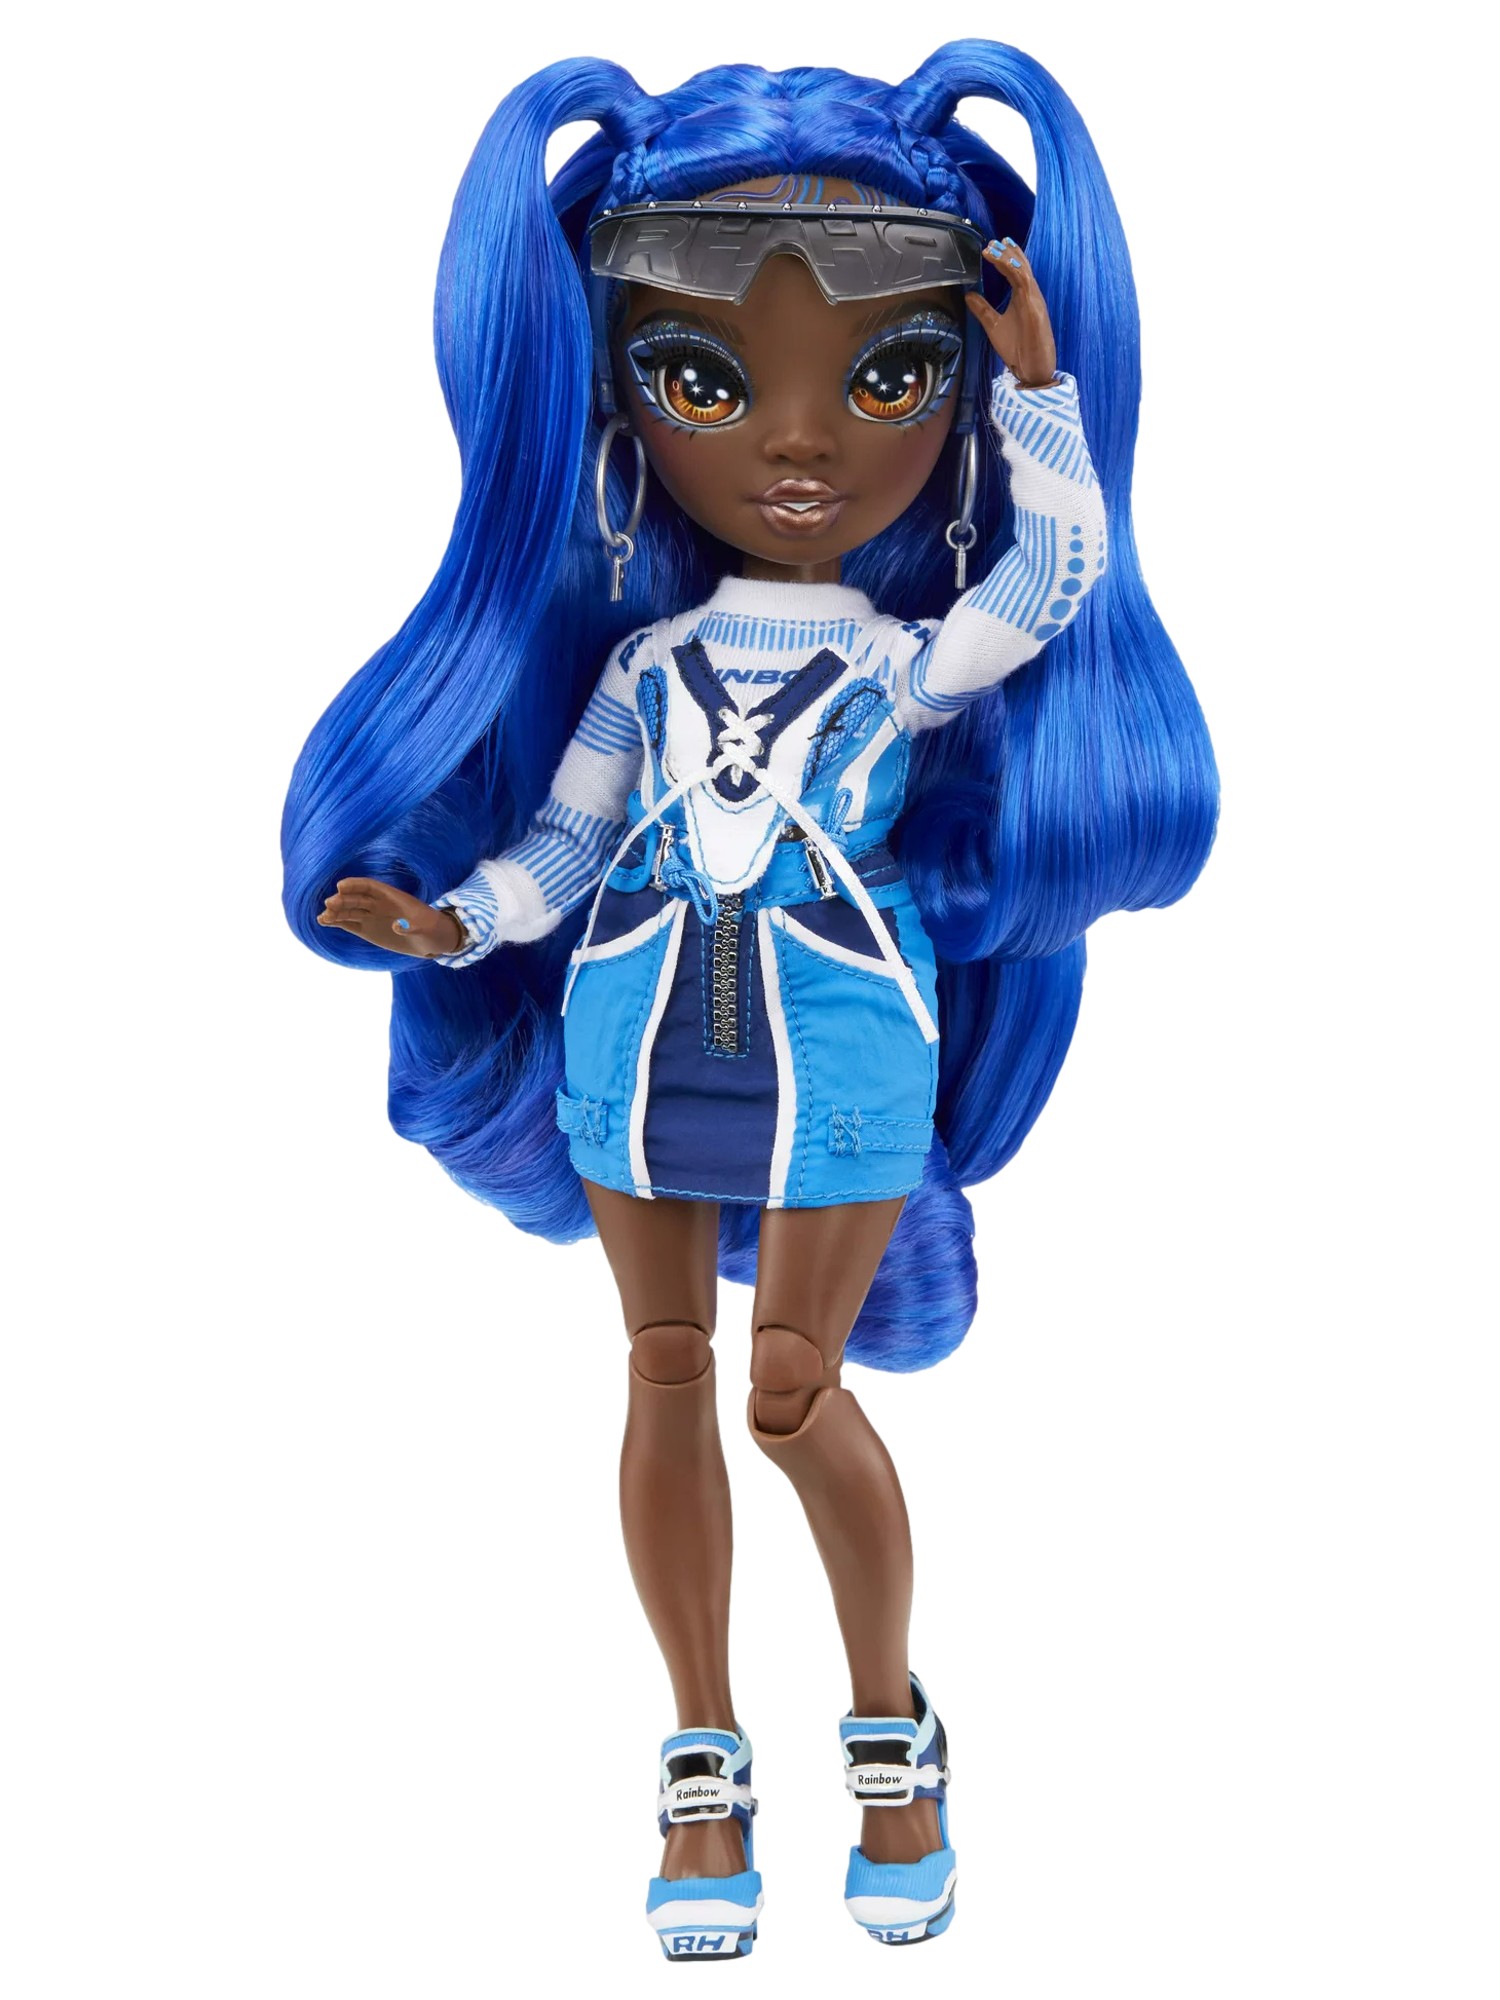 Rainbow High Coco Vanderbalt Cobalt Blue Black Fashion Doll Set with 2 Outfits